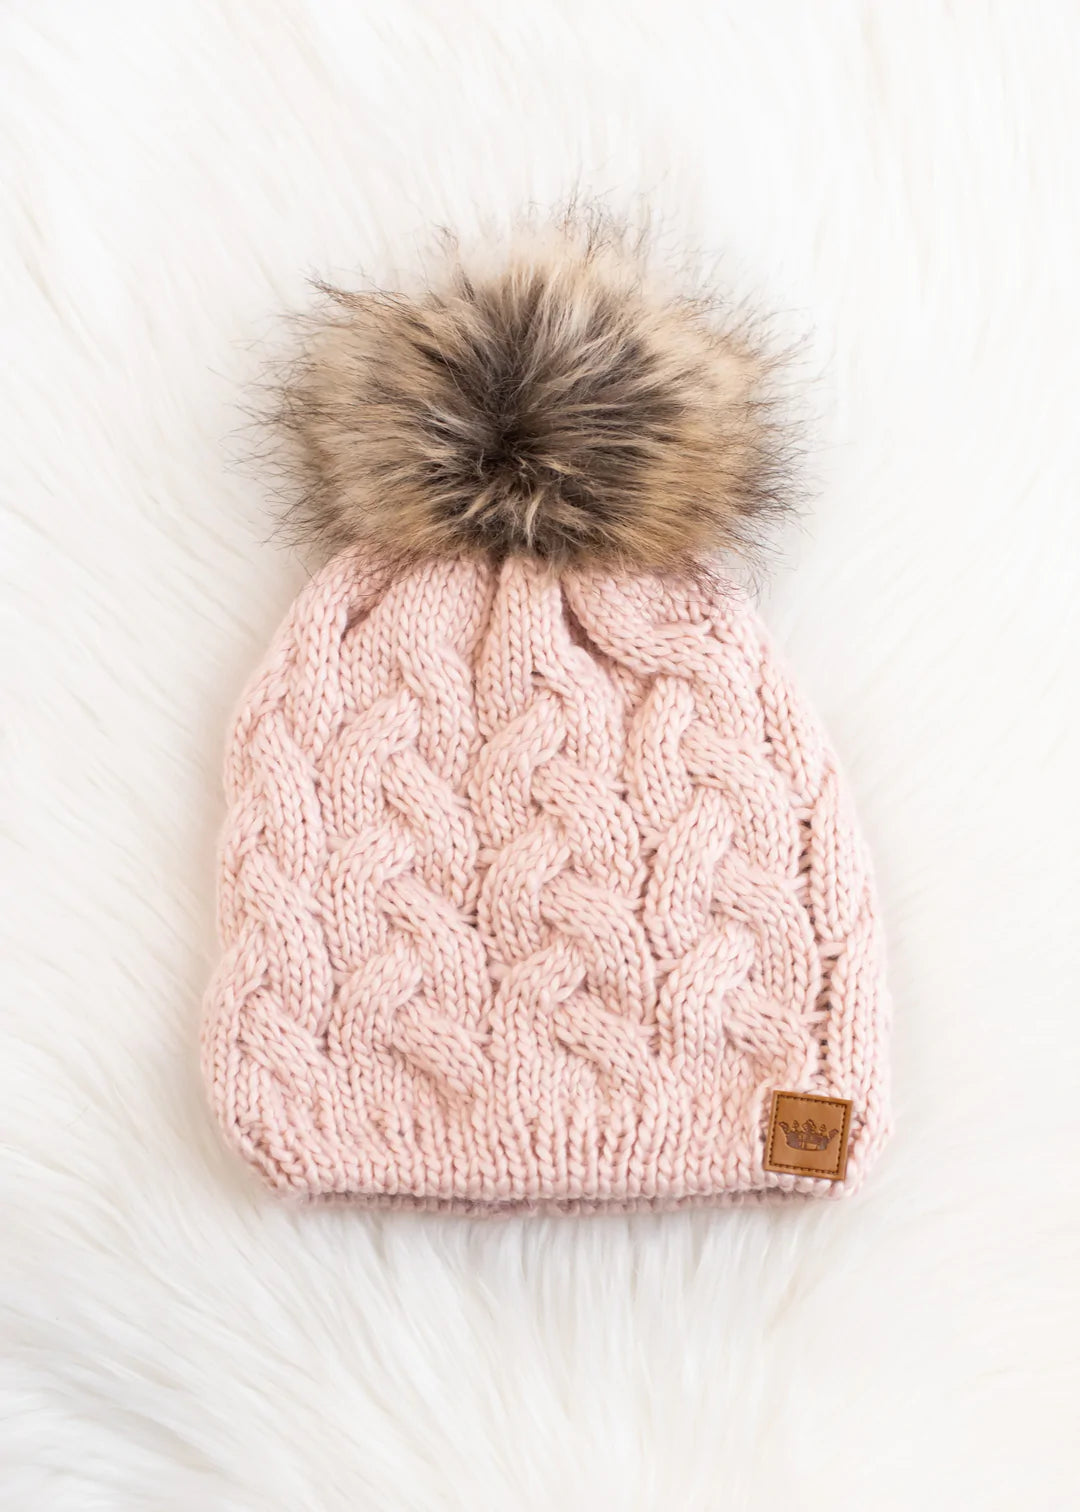 Braided Knit Hat with Faux Fur Pom